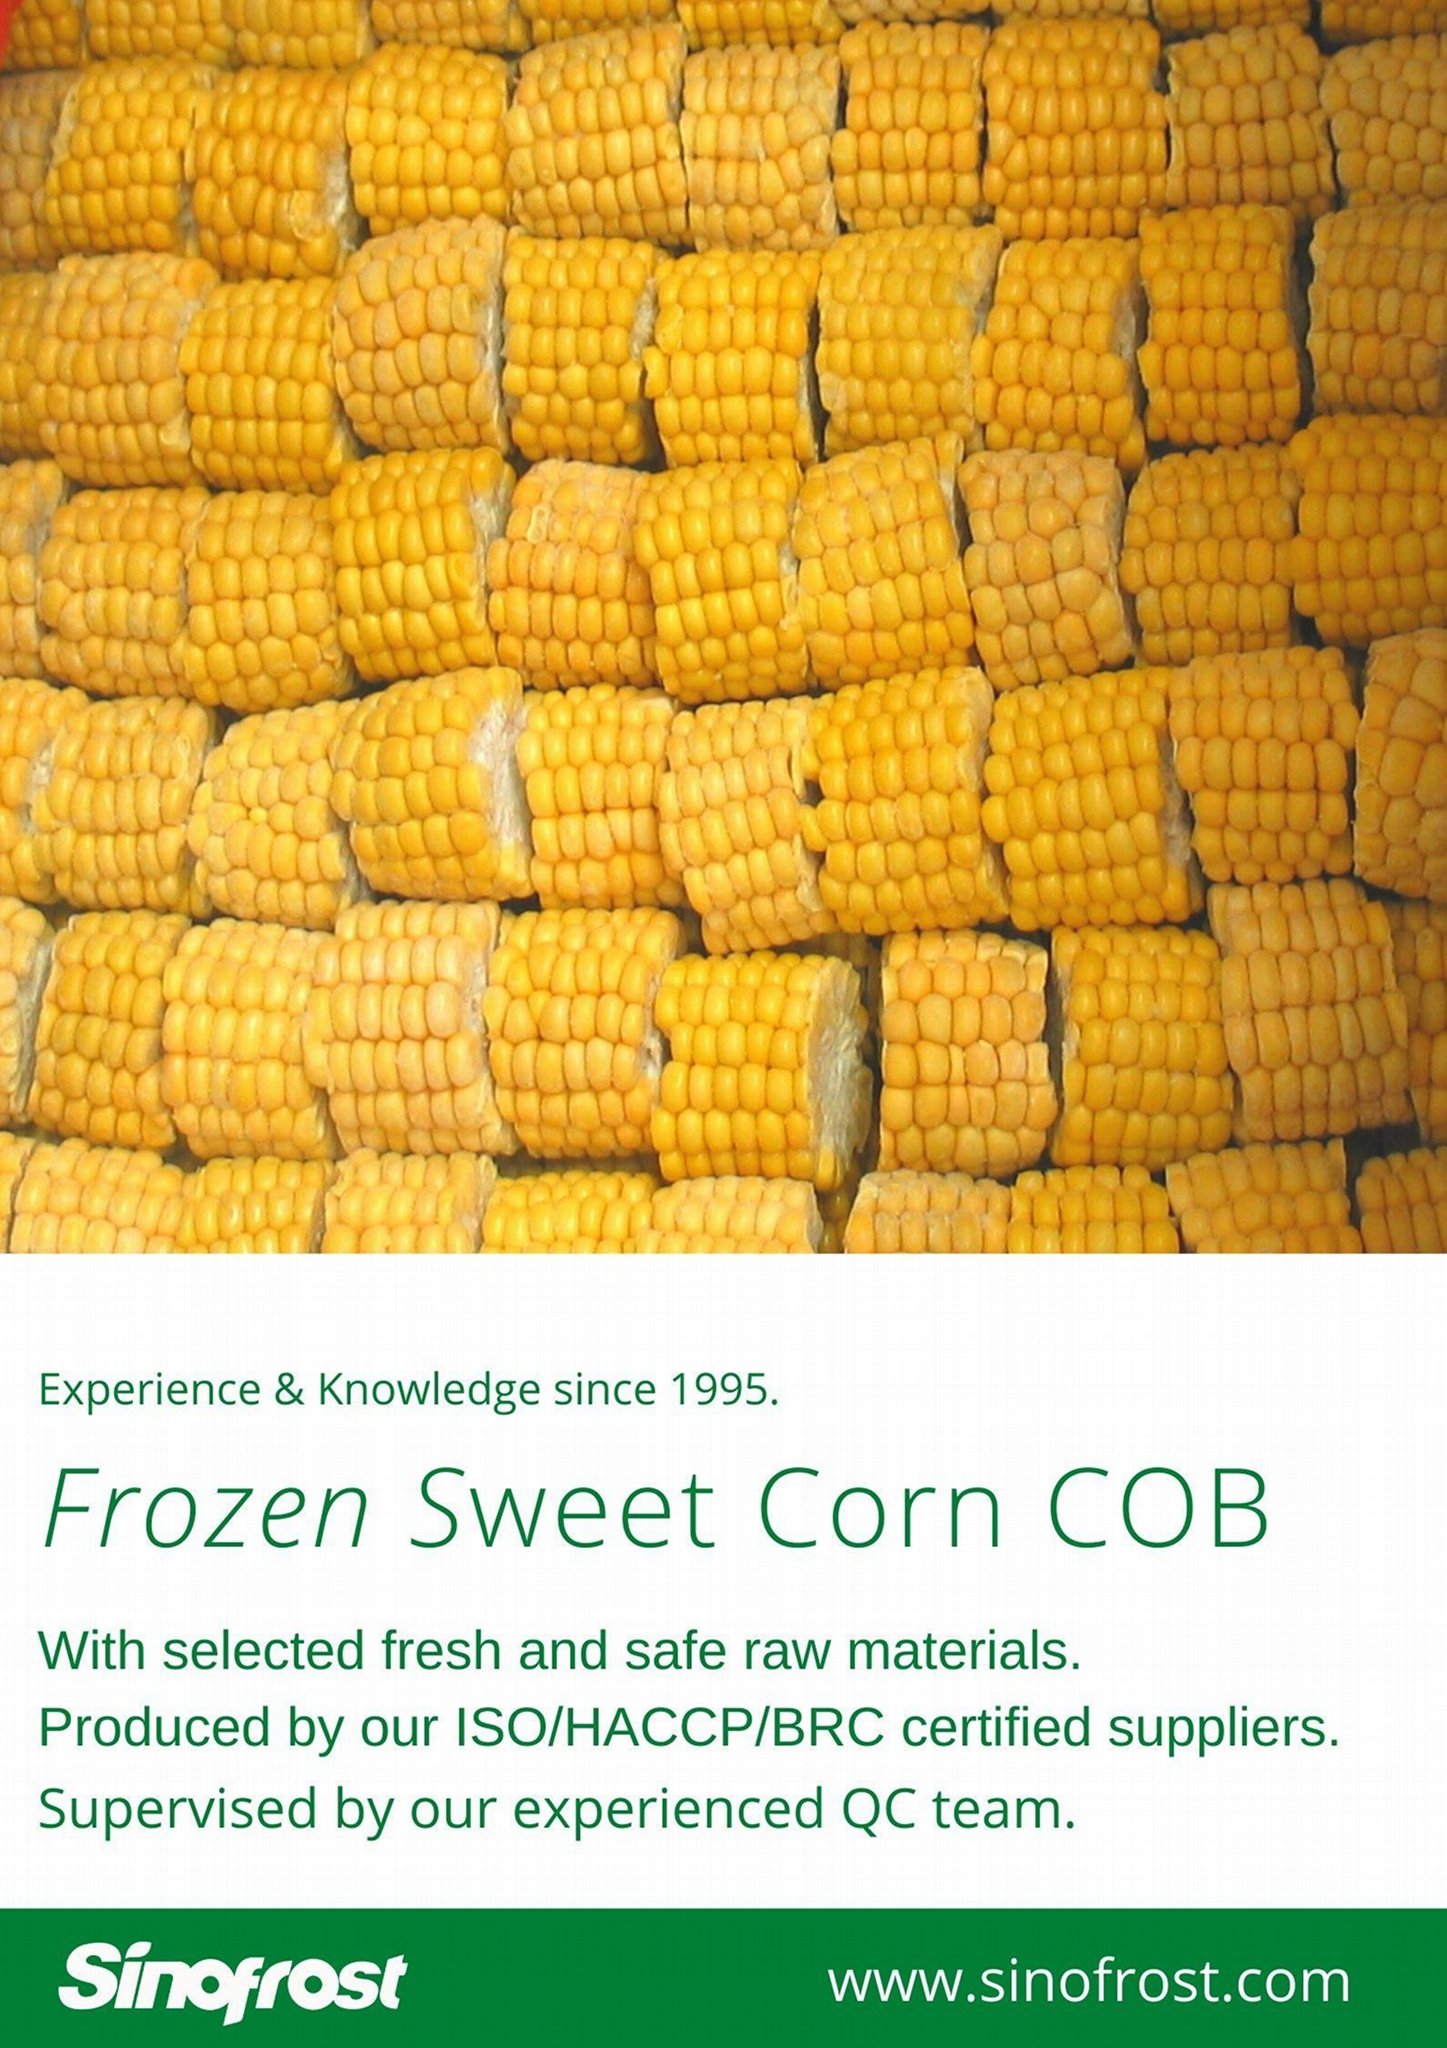 IQF Sweet Cob Corn,Frozen Sweet Corn on the COB,Frozen COB Sweet Corn 5